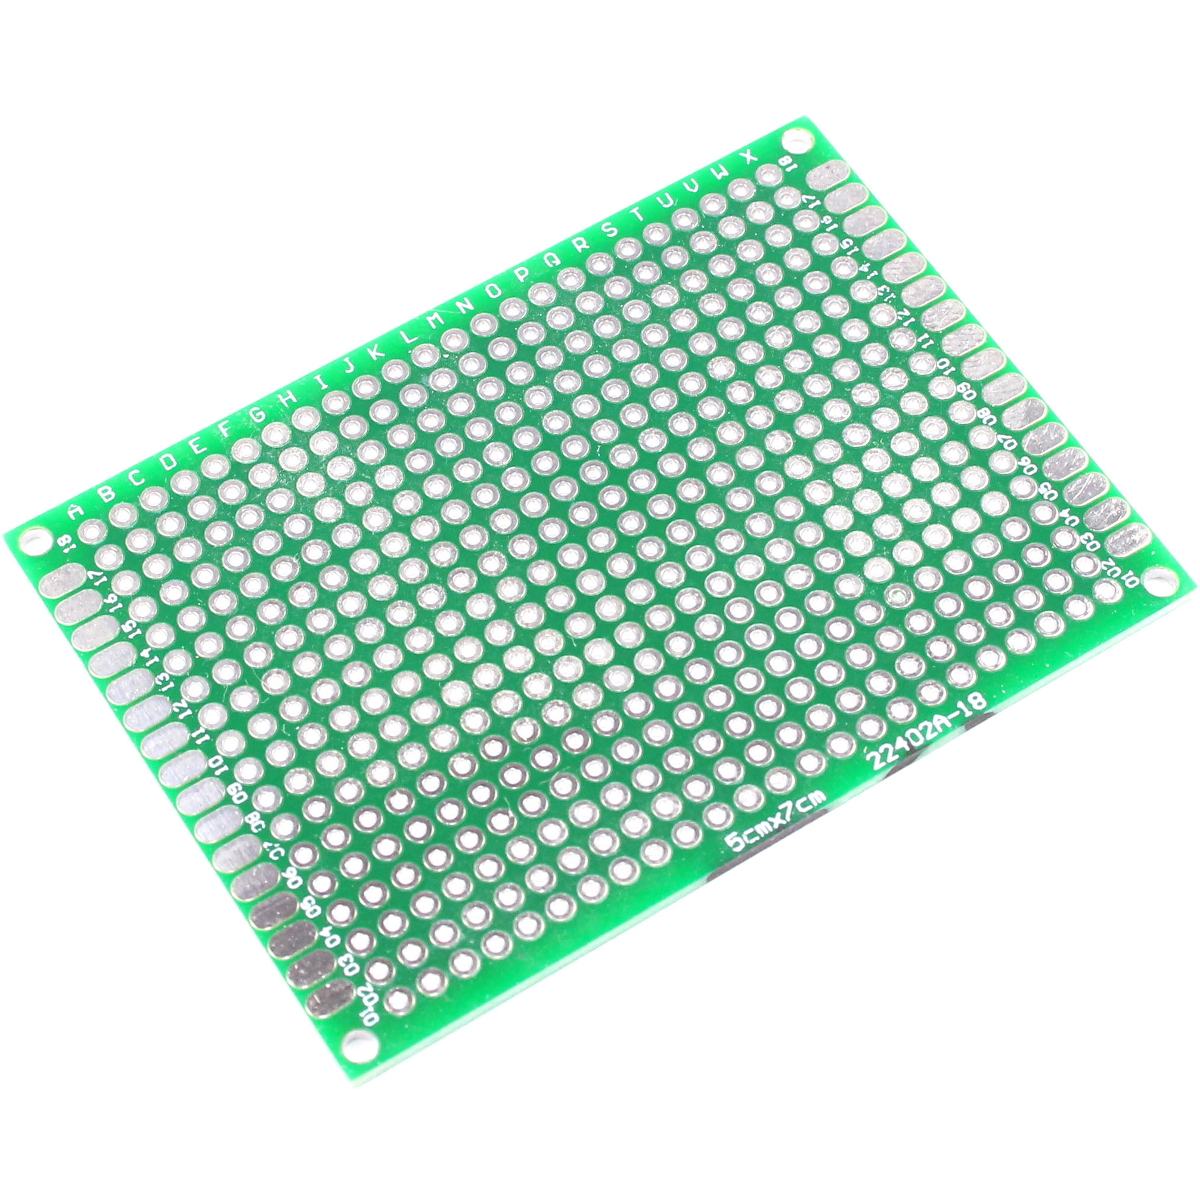 5cm x 7cm Green Prototype Board Image 1